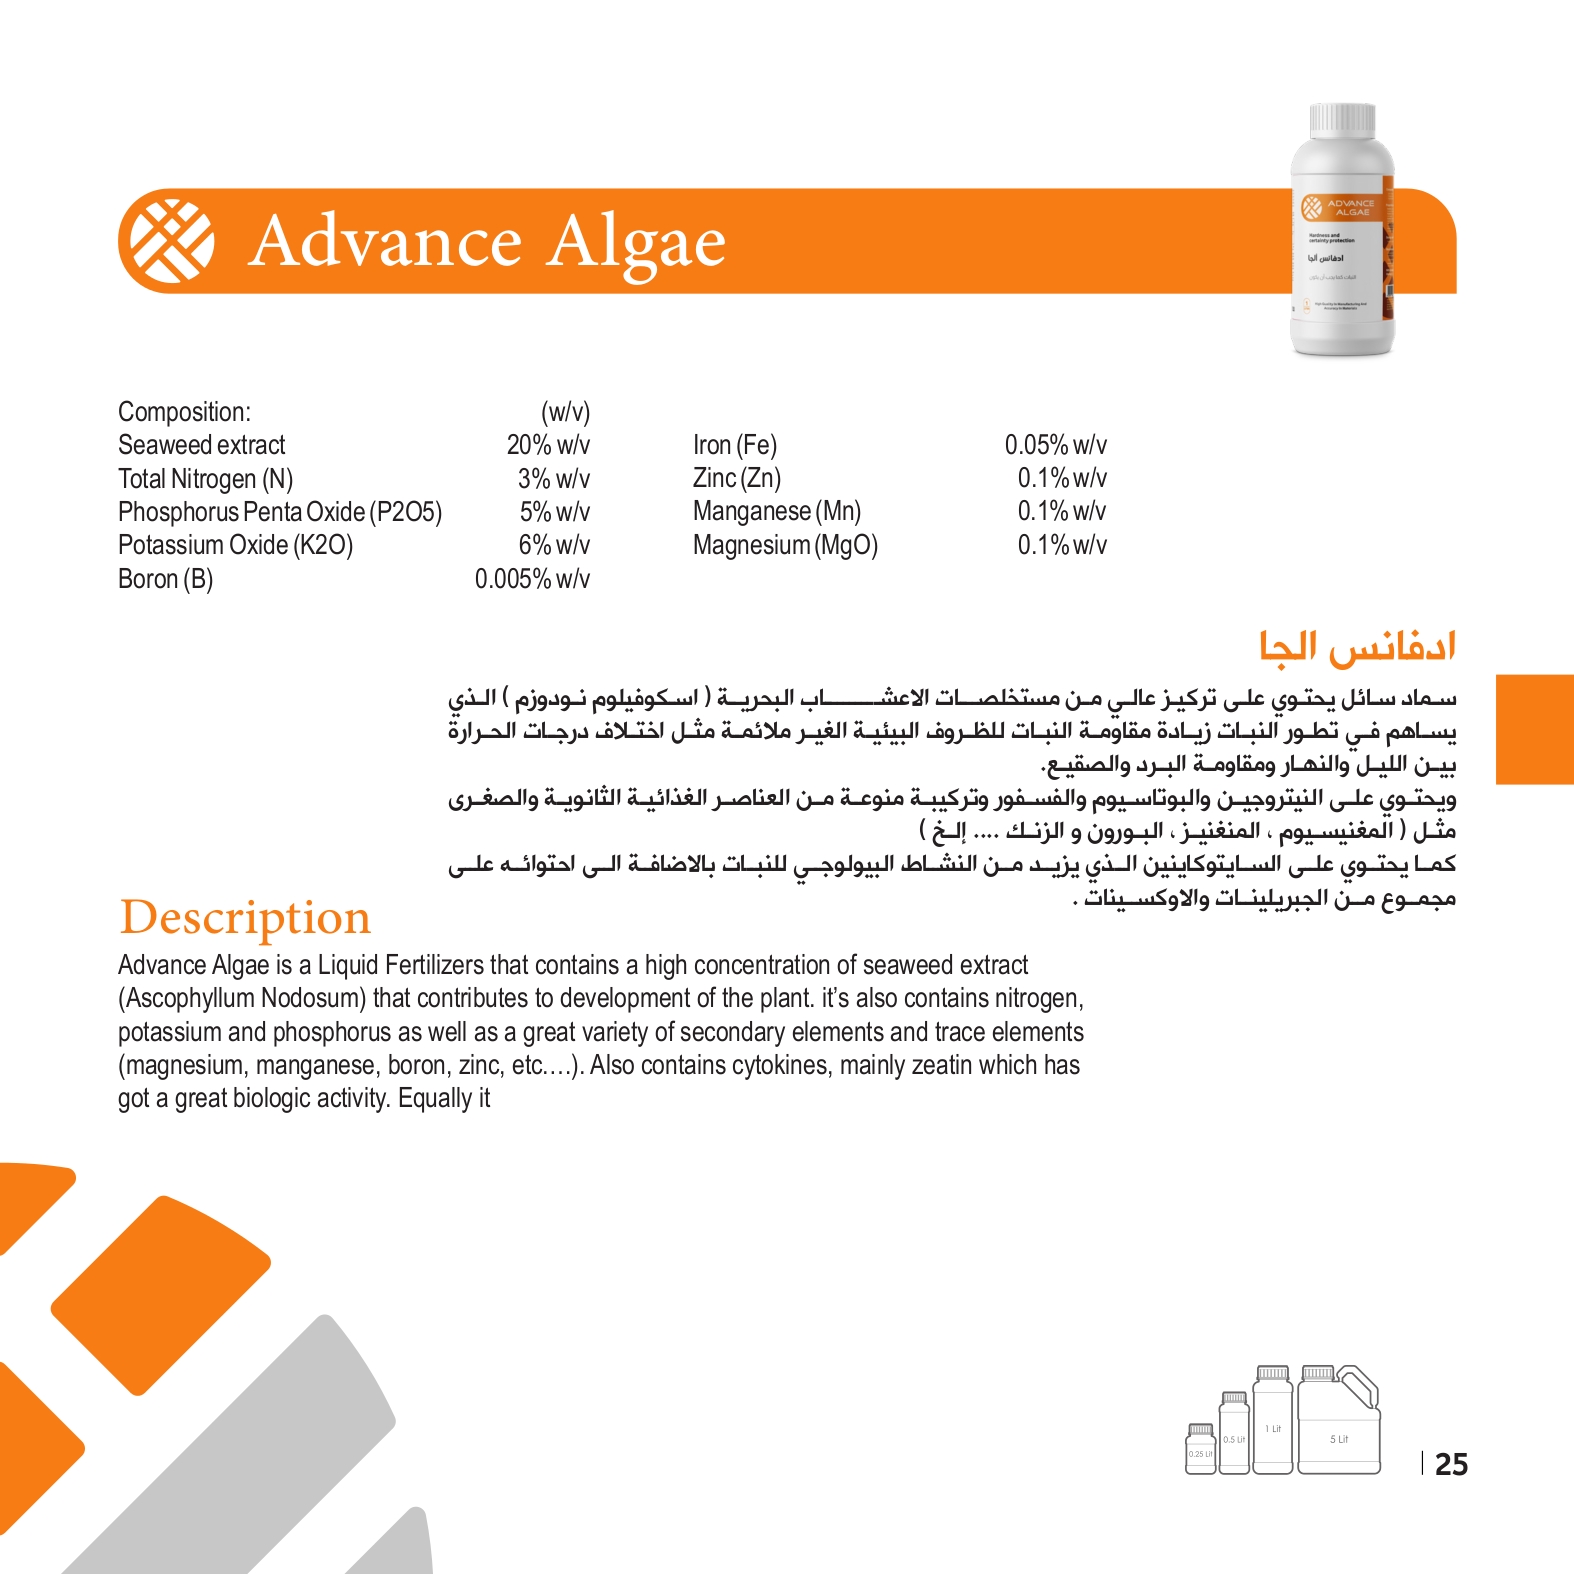 Advance Algae